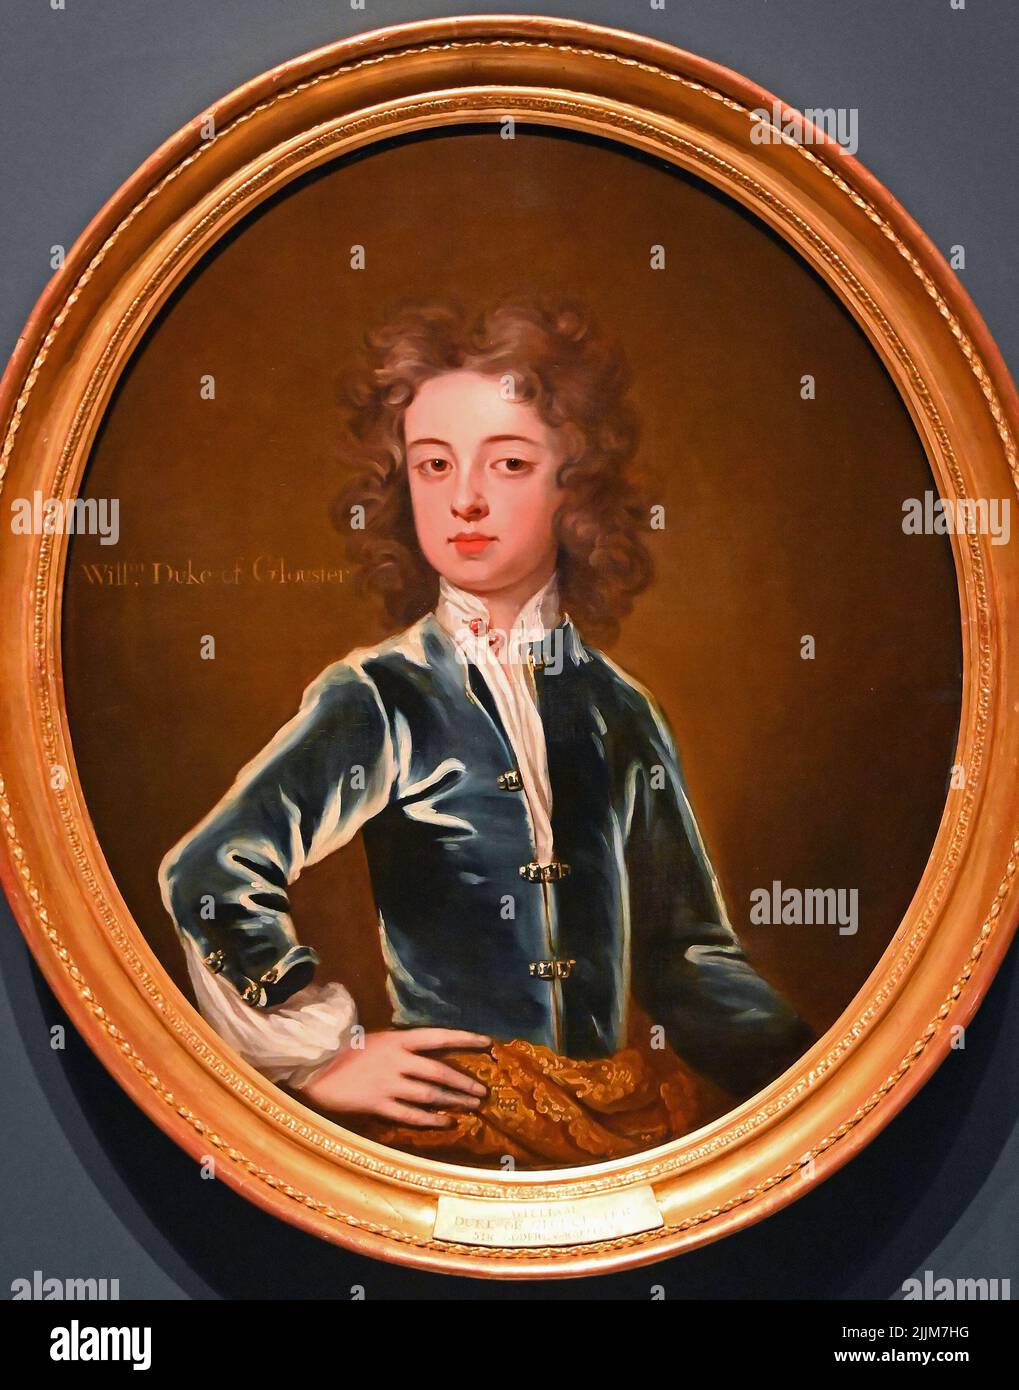 Guillermo, duque de Gloucester. c1695. Atribuido a Charles d'Agar. Óleo sobre lienzo. Foto de stock